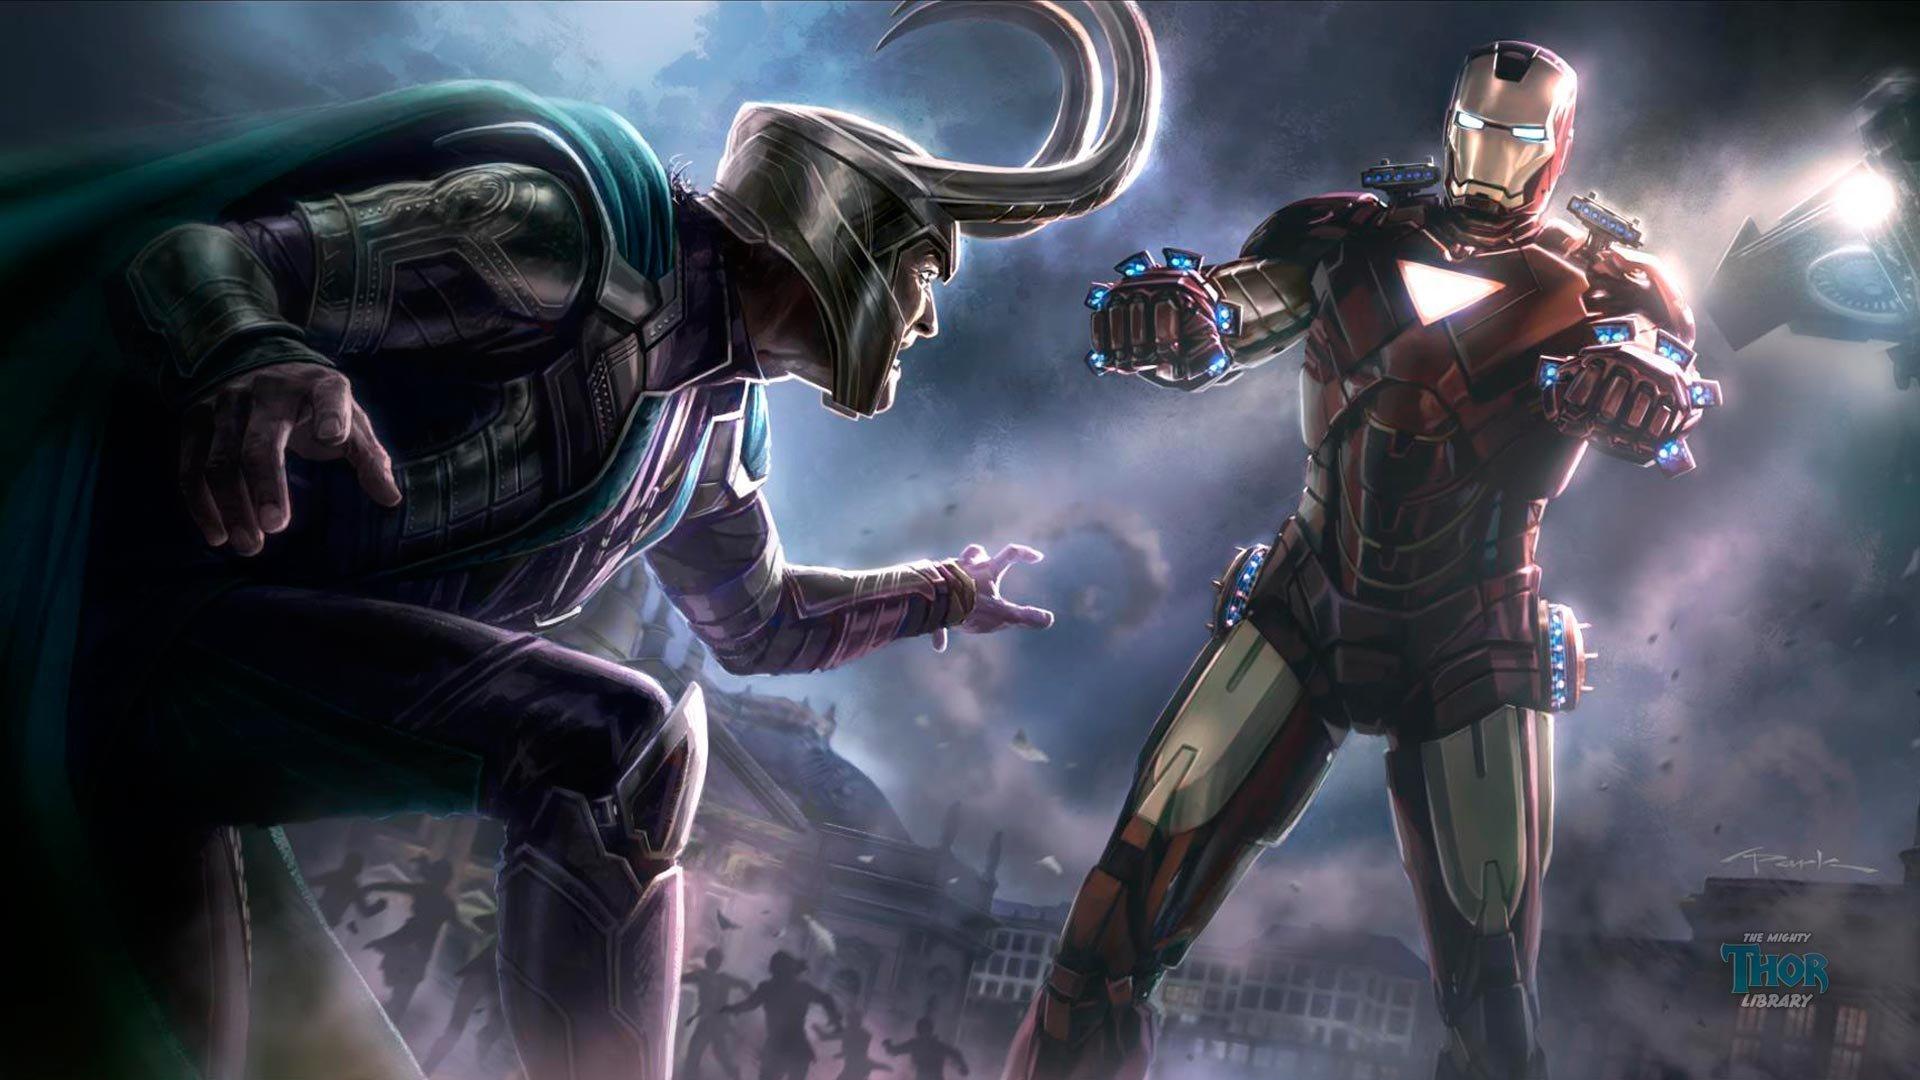 Iron Man comics concept art The Avengers Loki armored suit Loki Laufeyson wallpaperx1080